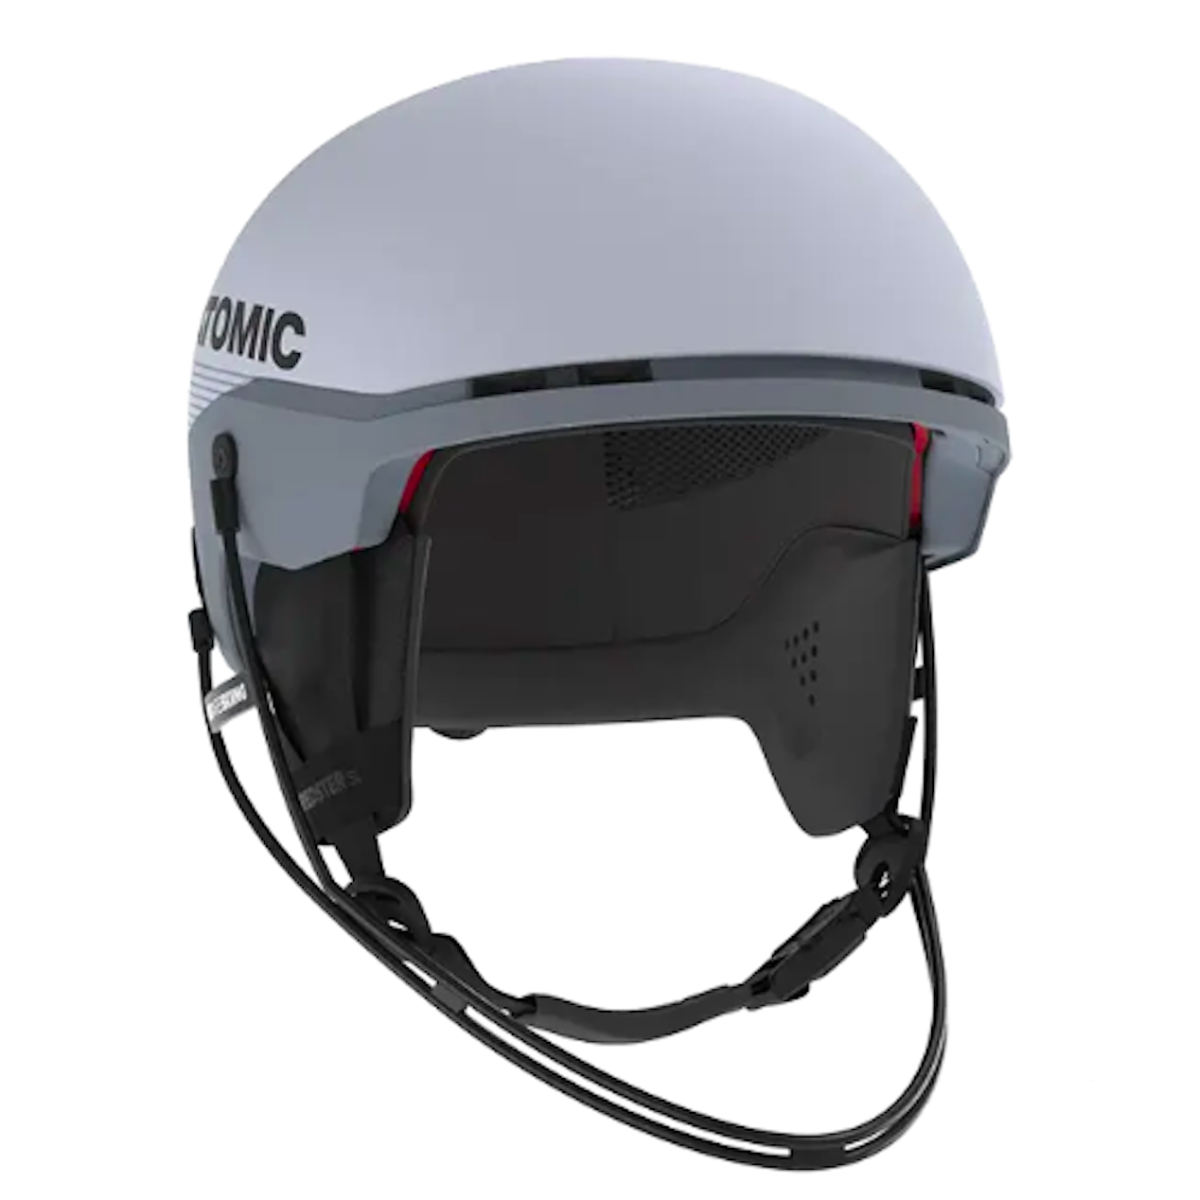 ATOMIC REDSTER SL helmet - white/grey